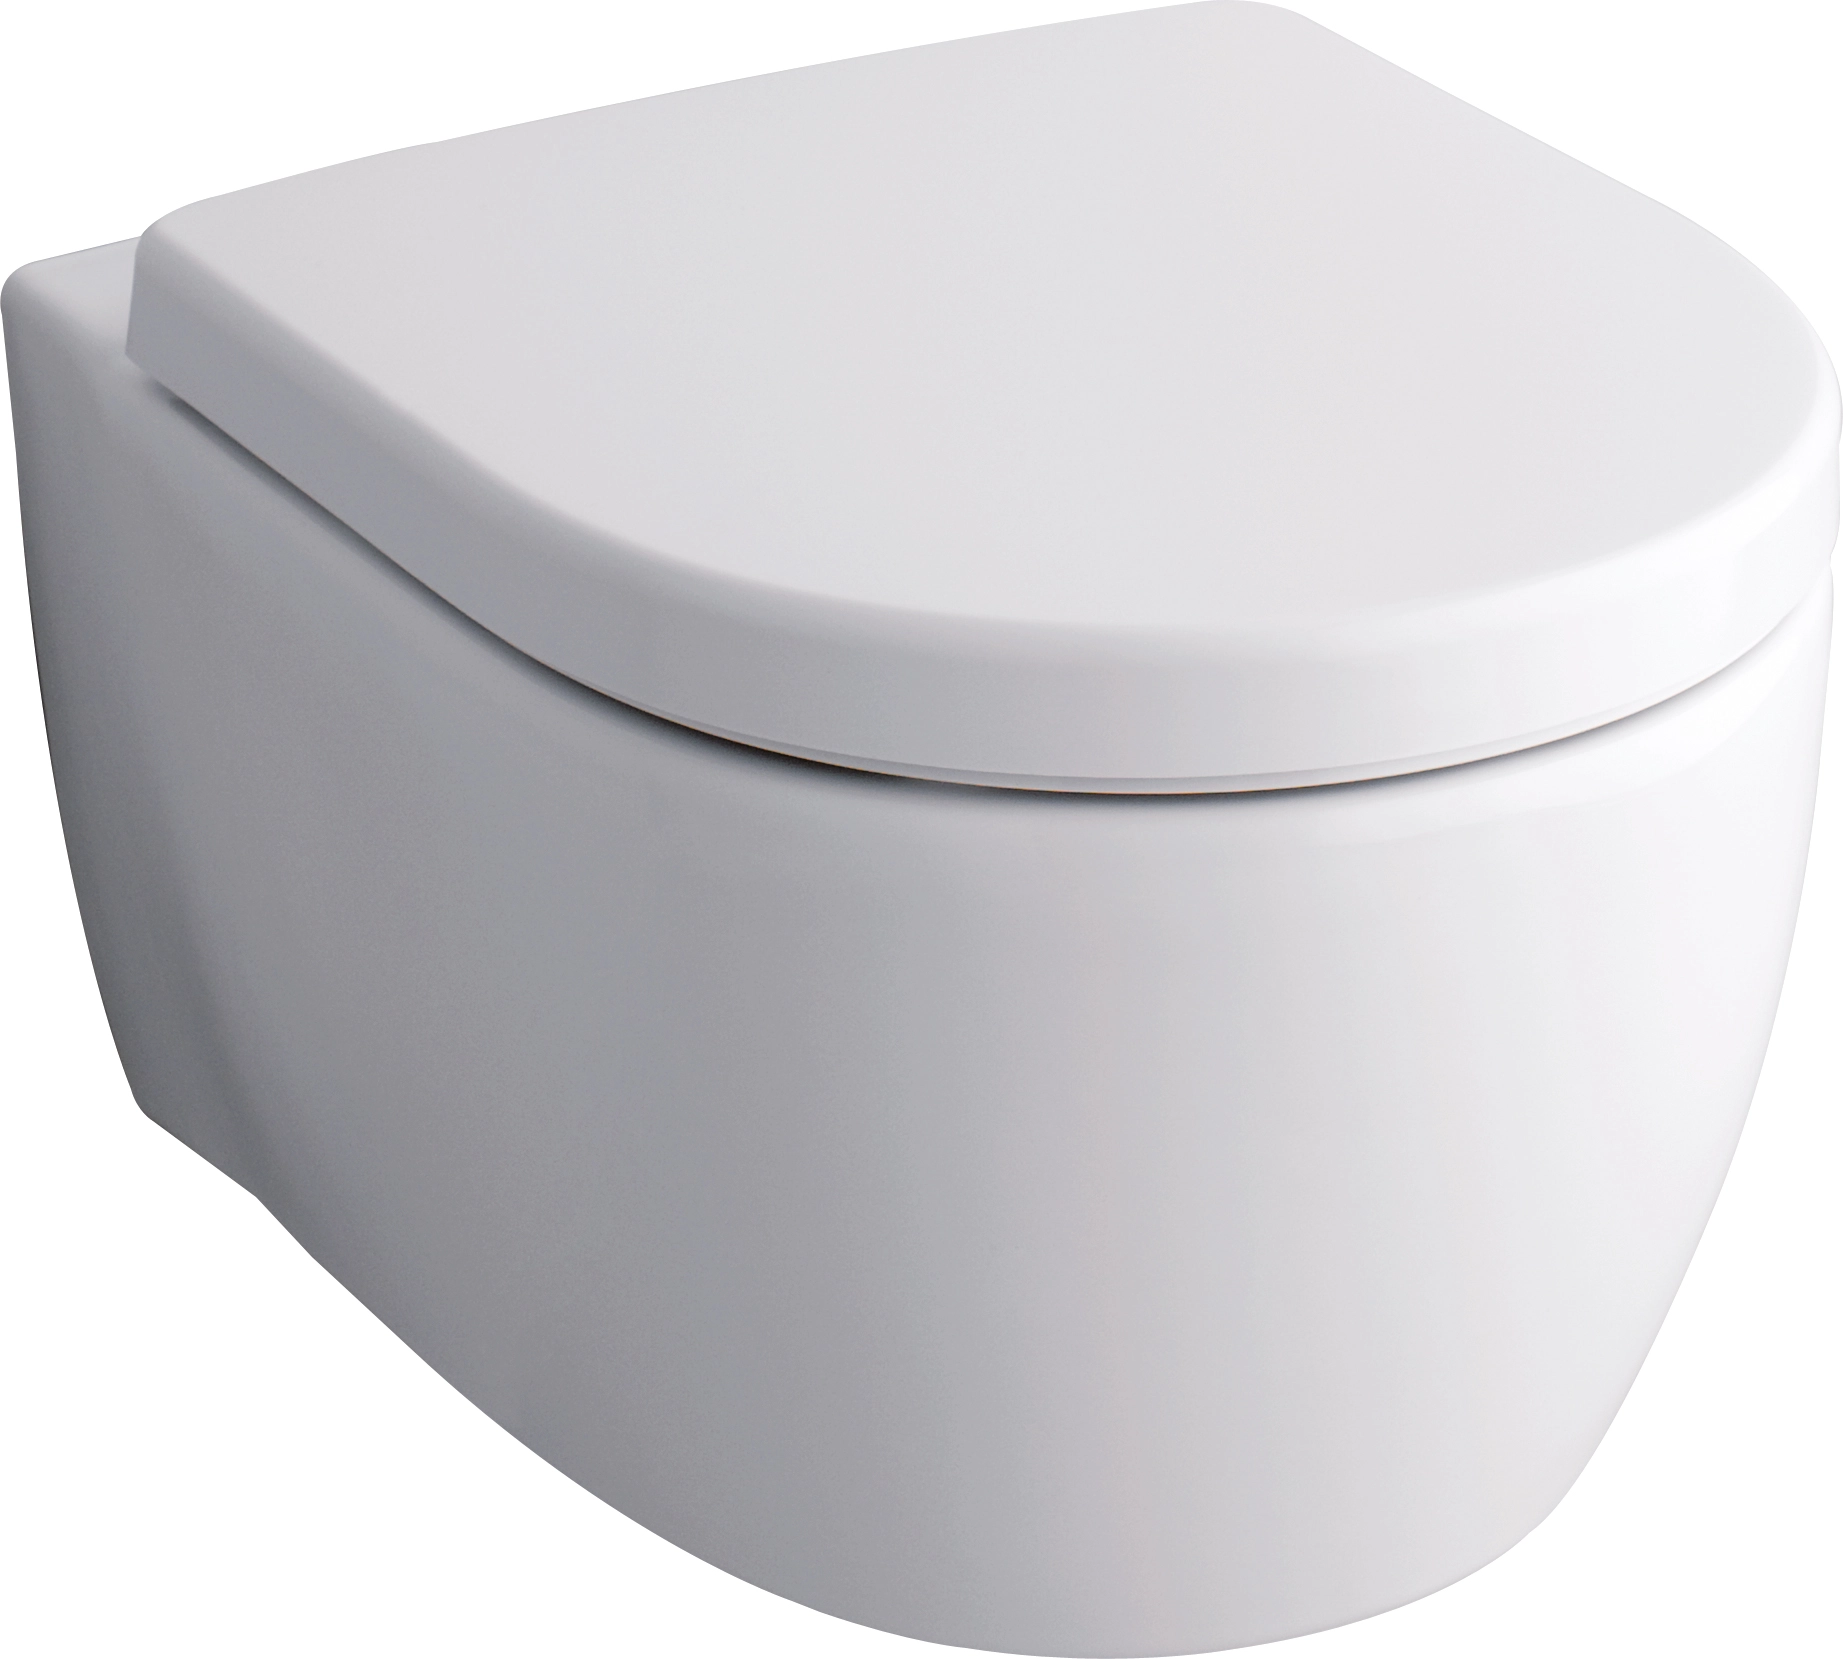 bei Inkl. Geberit OBI Spülrandlos kaufen Weiß Wand-WC-Set iCon Tiefspül WC-Sitz